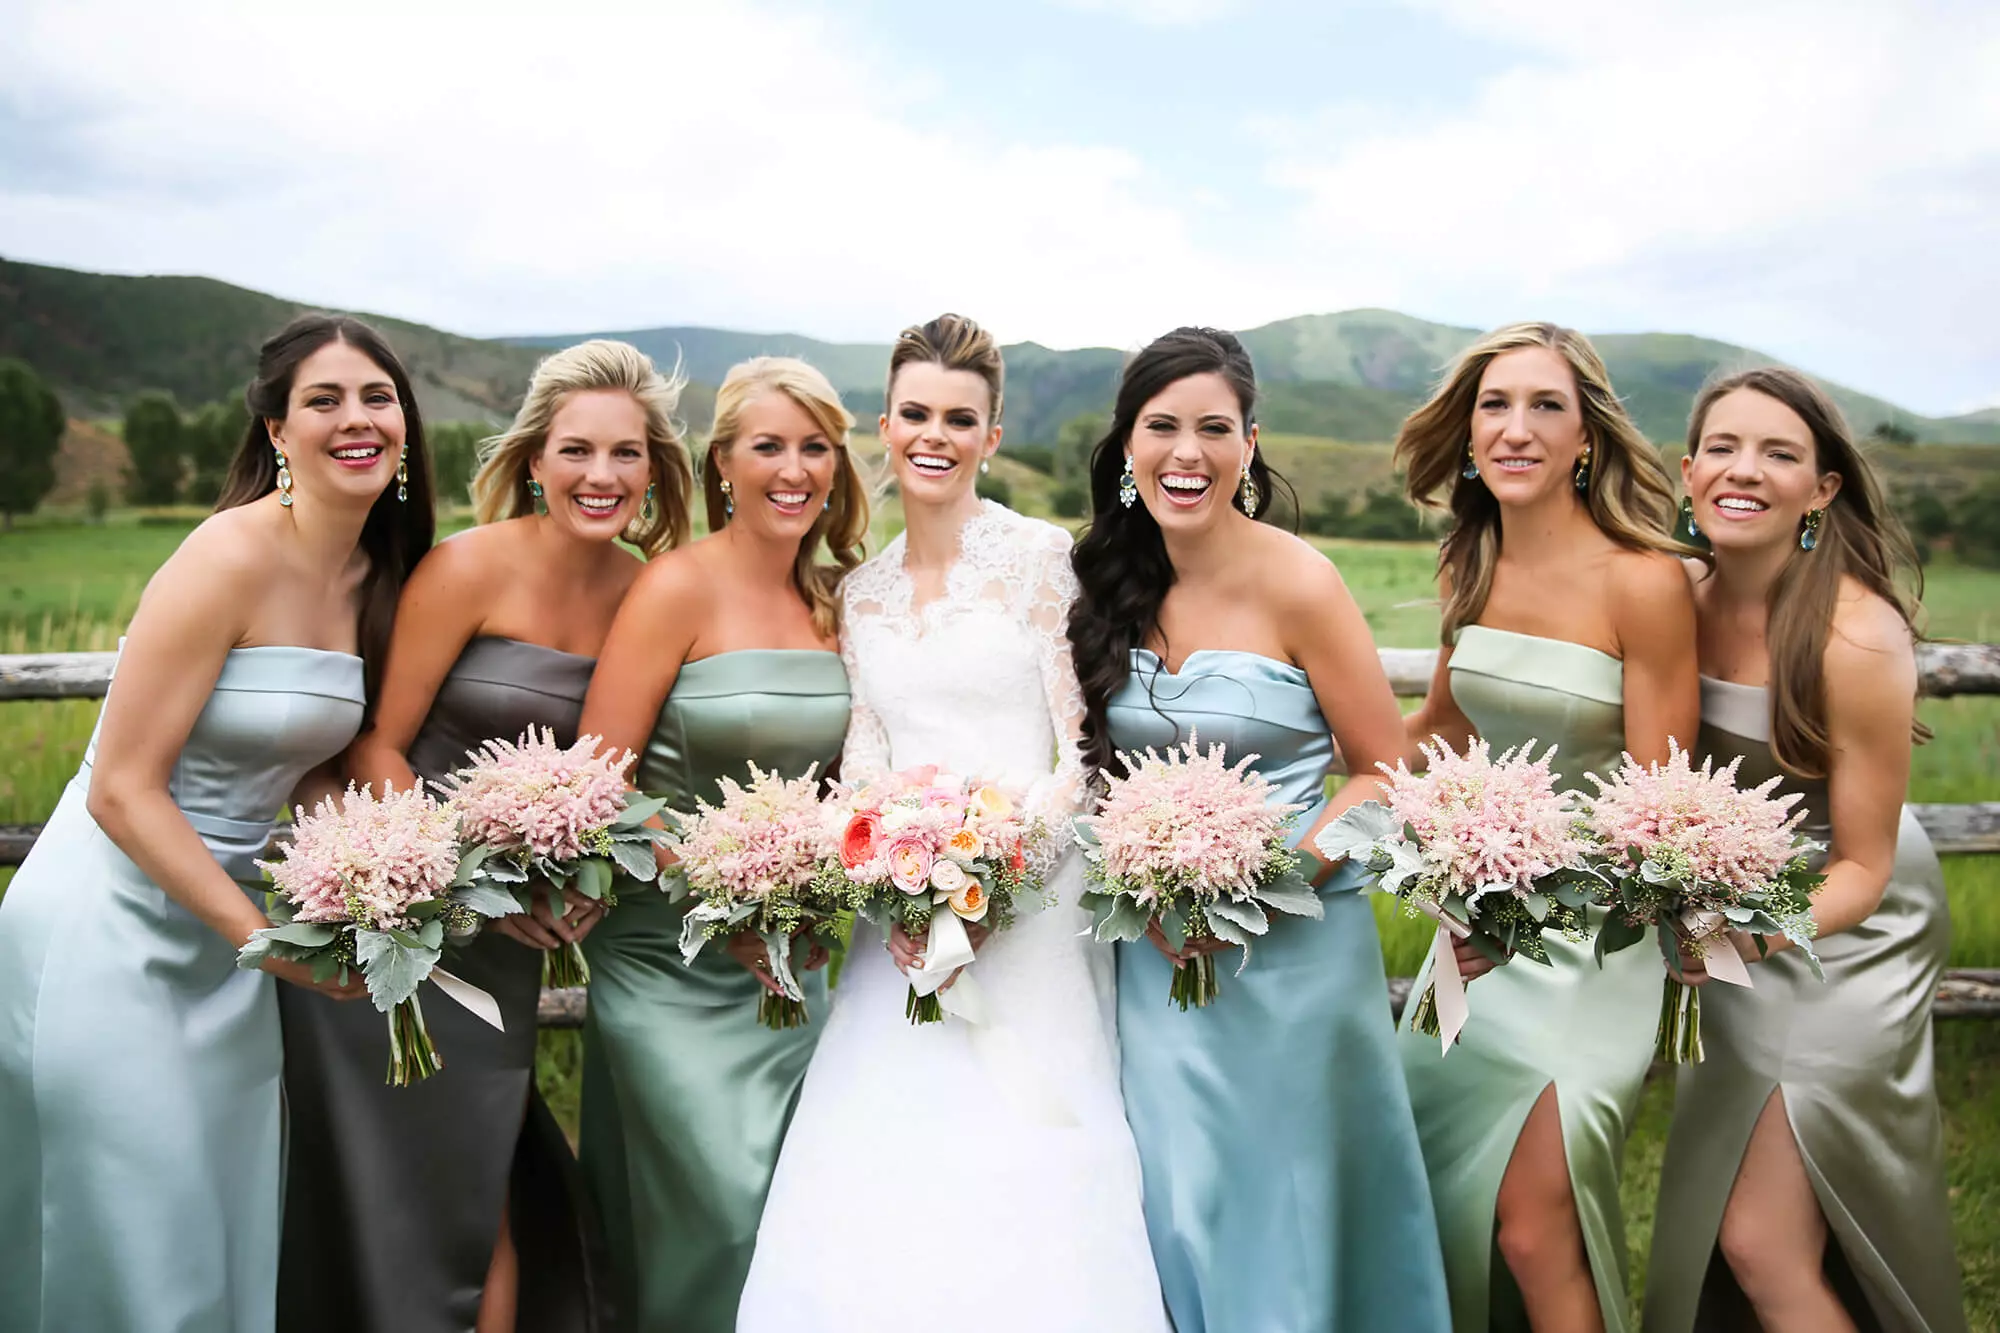 The Stylish Bride wedding day dressers, stylists, bridesmaid styling